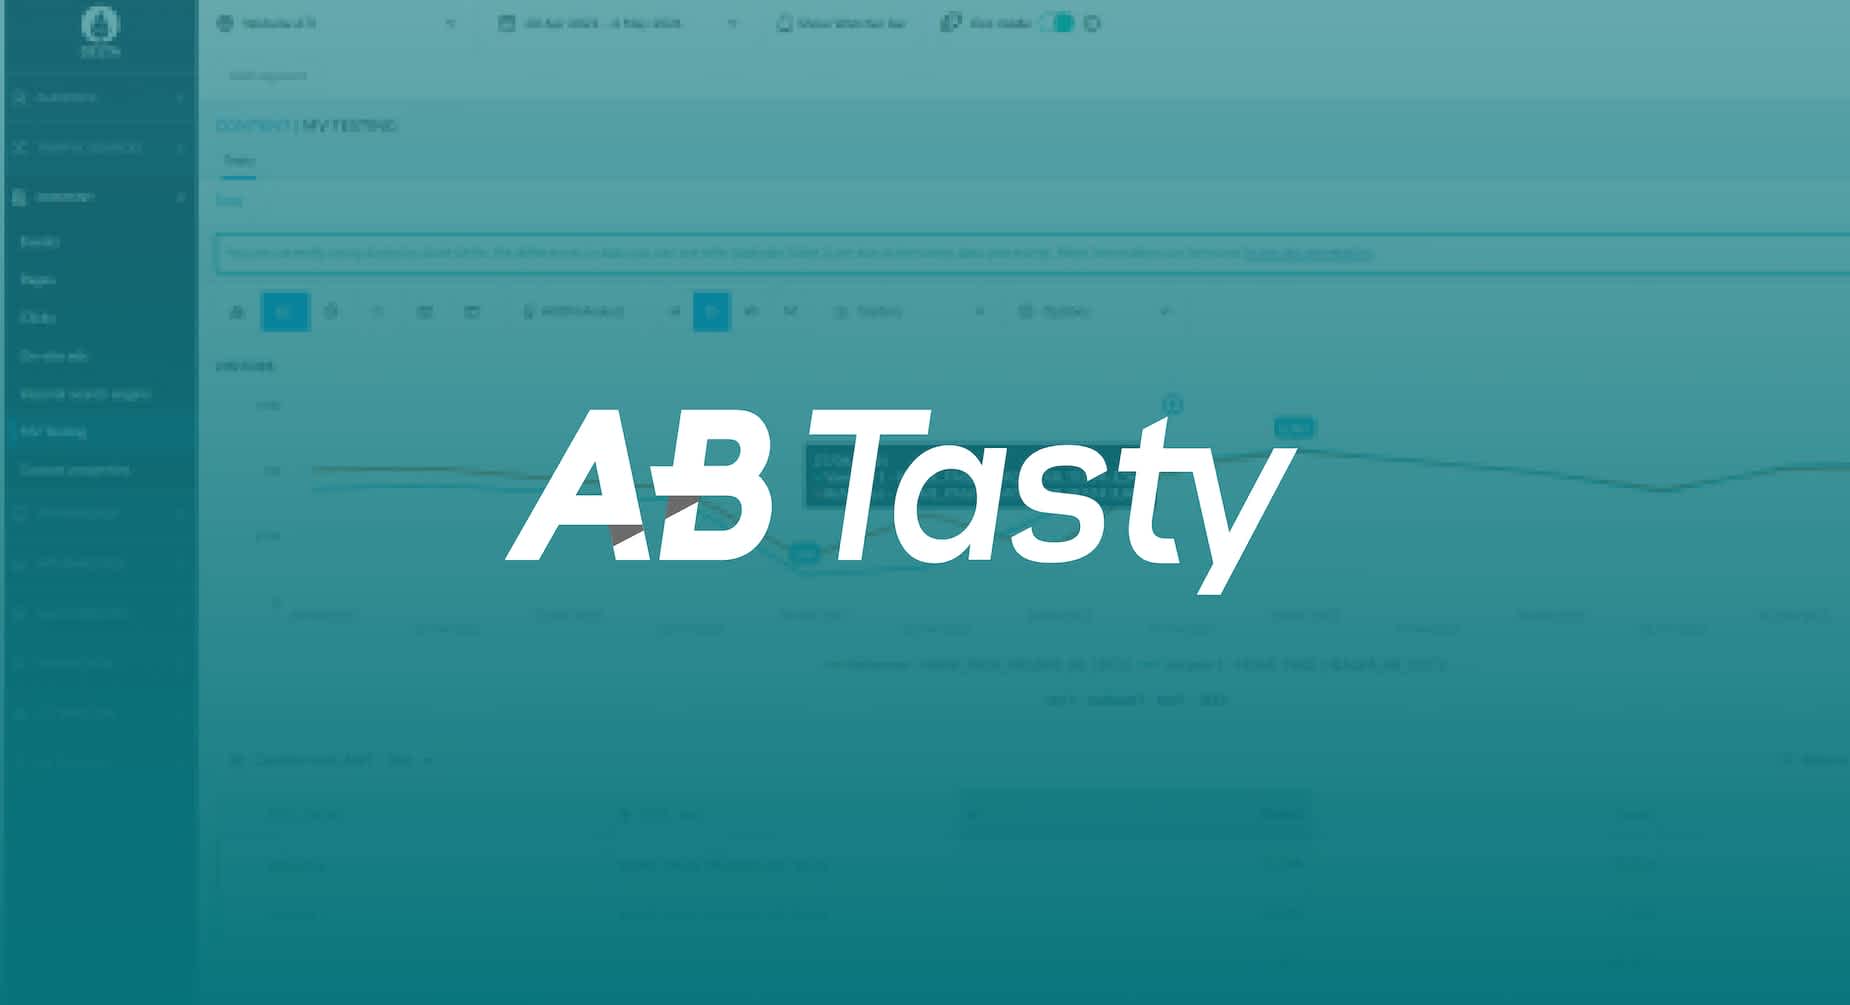 AB Tasty logo over teal background